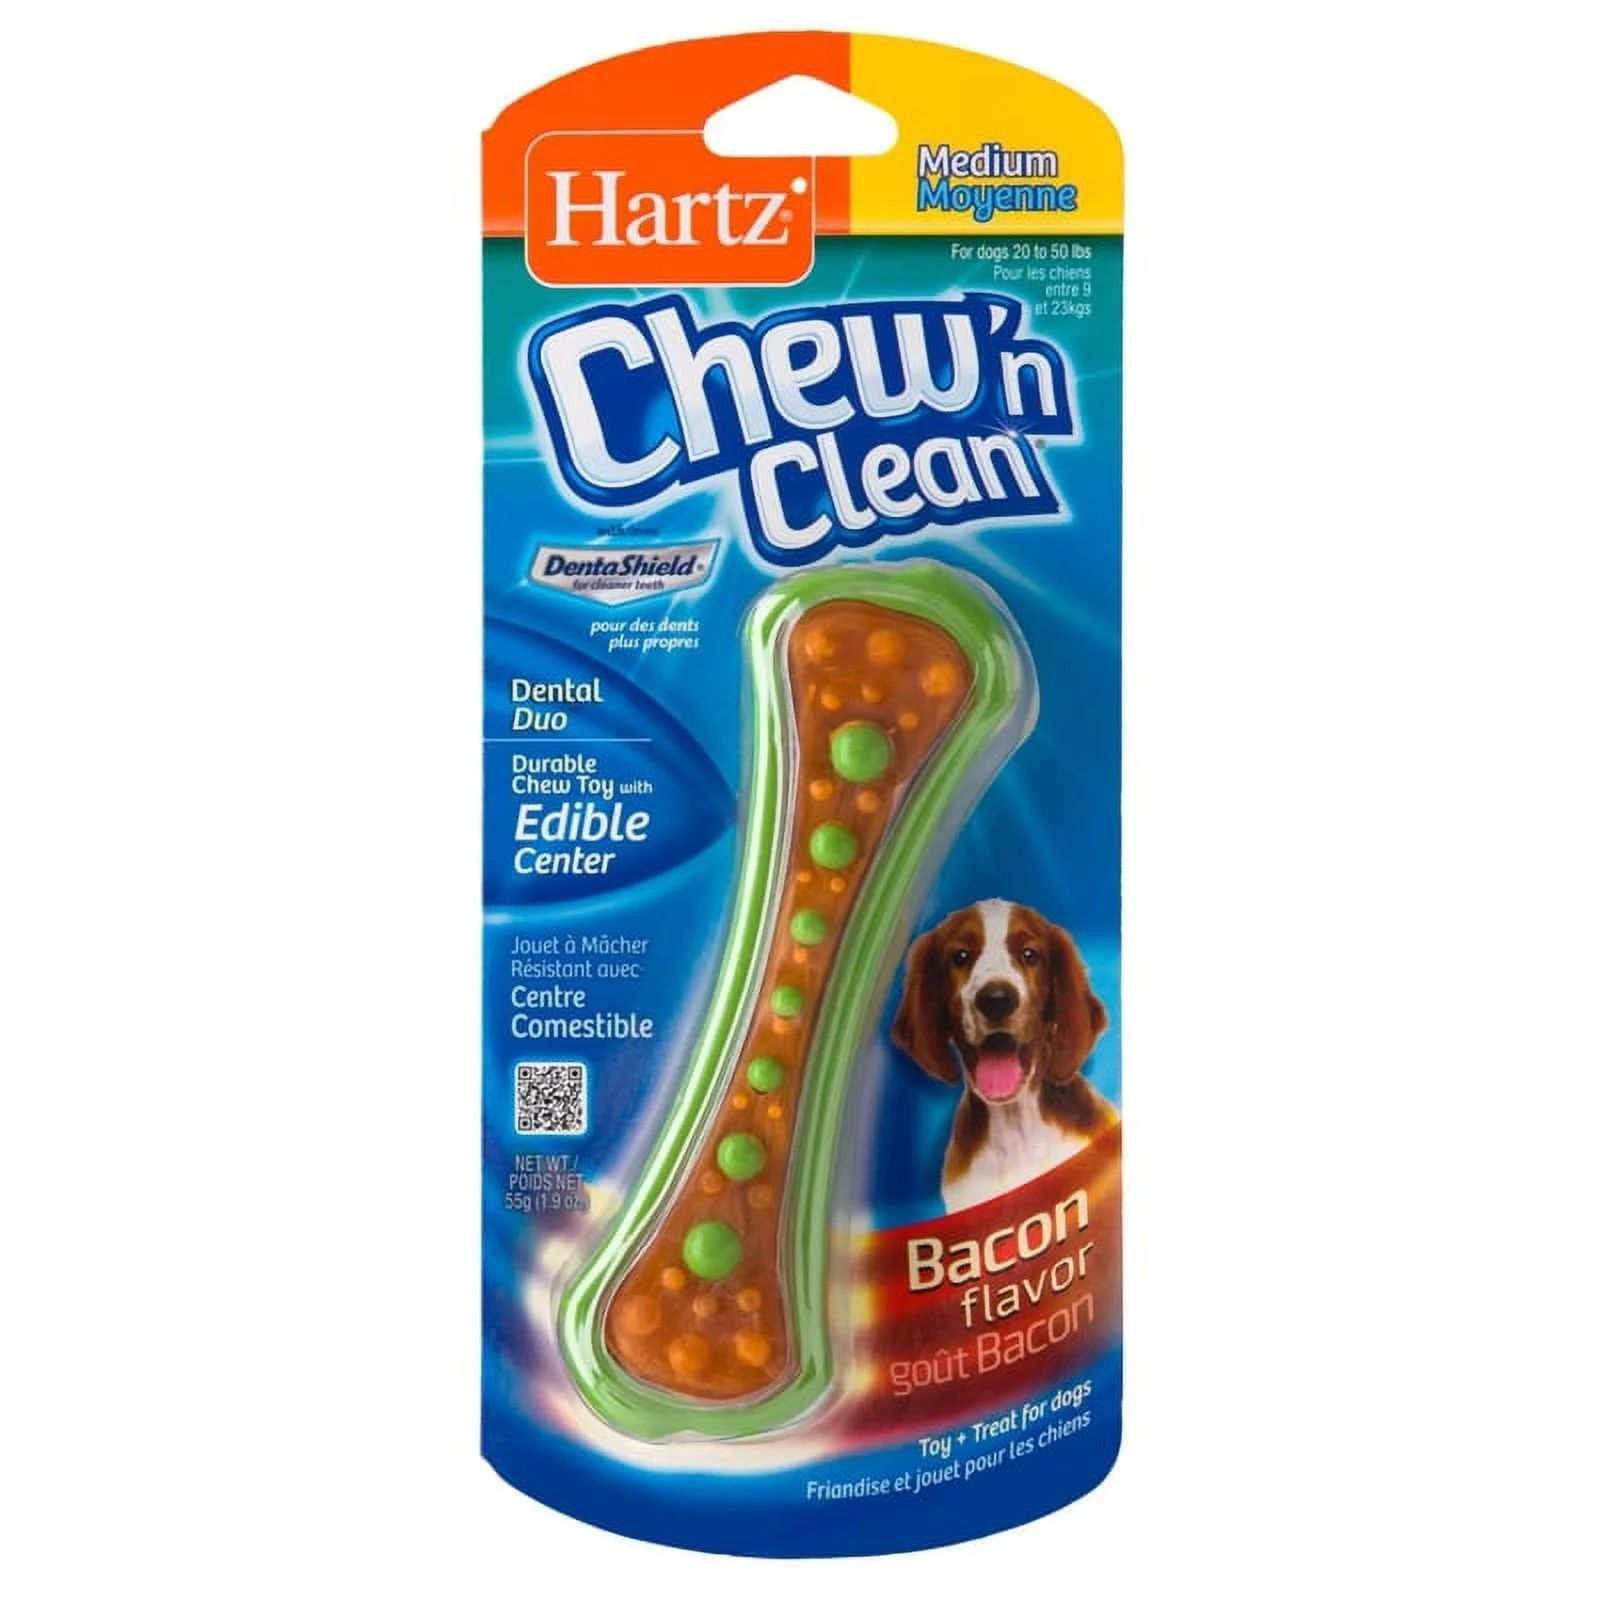 Hartz Chew 'n Clean Dental Duo Dog Toy, Medium, Color May Vary | Walmart (US)